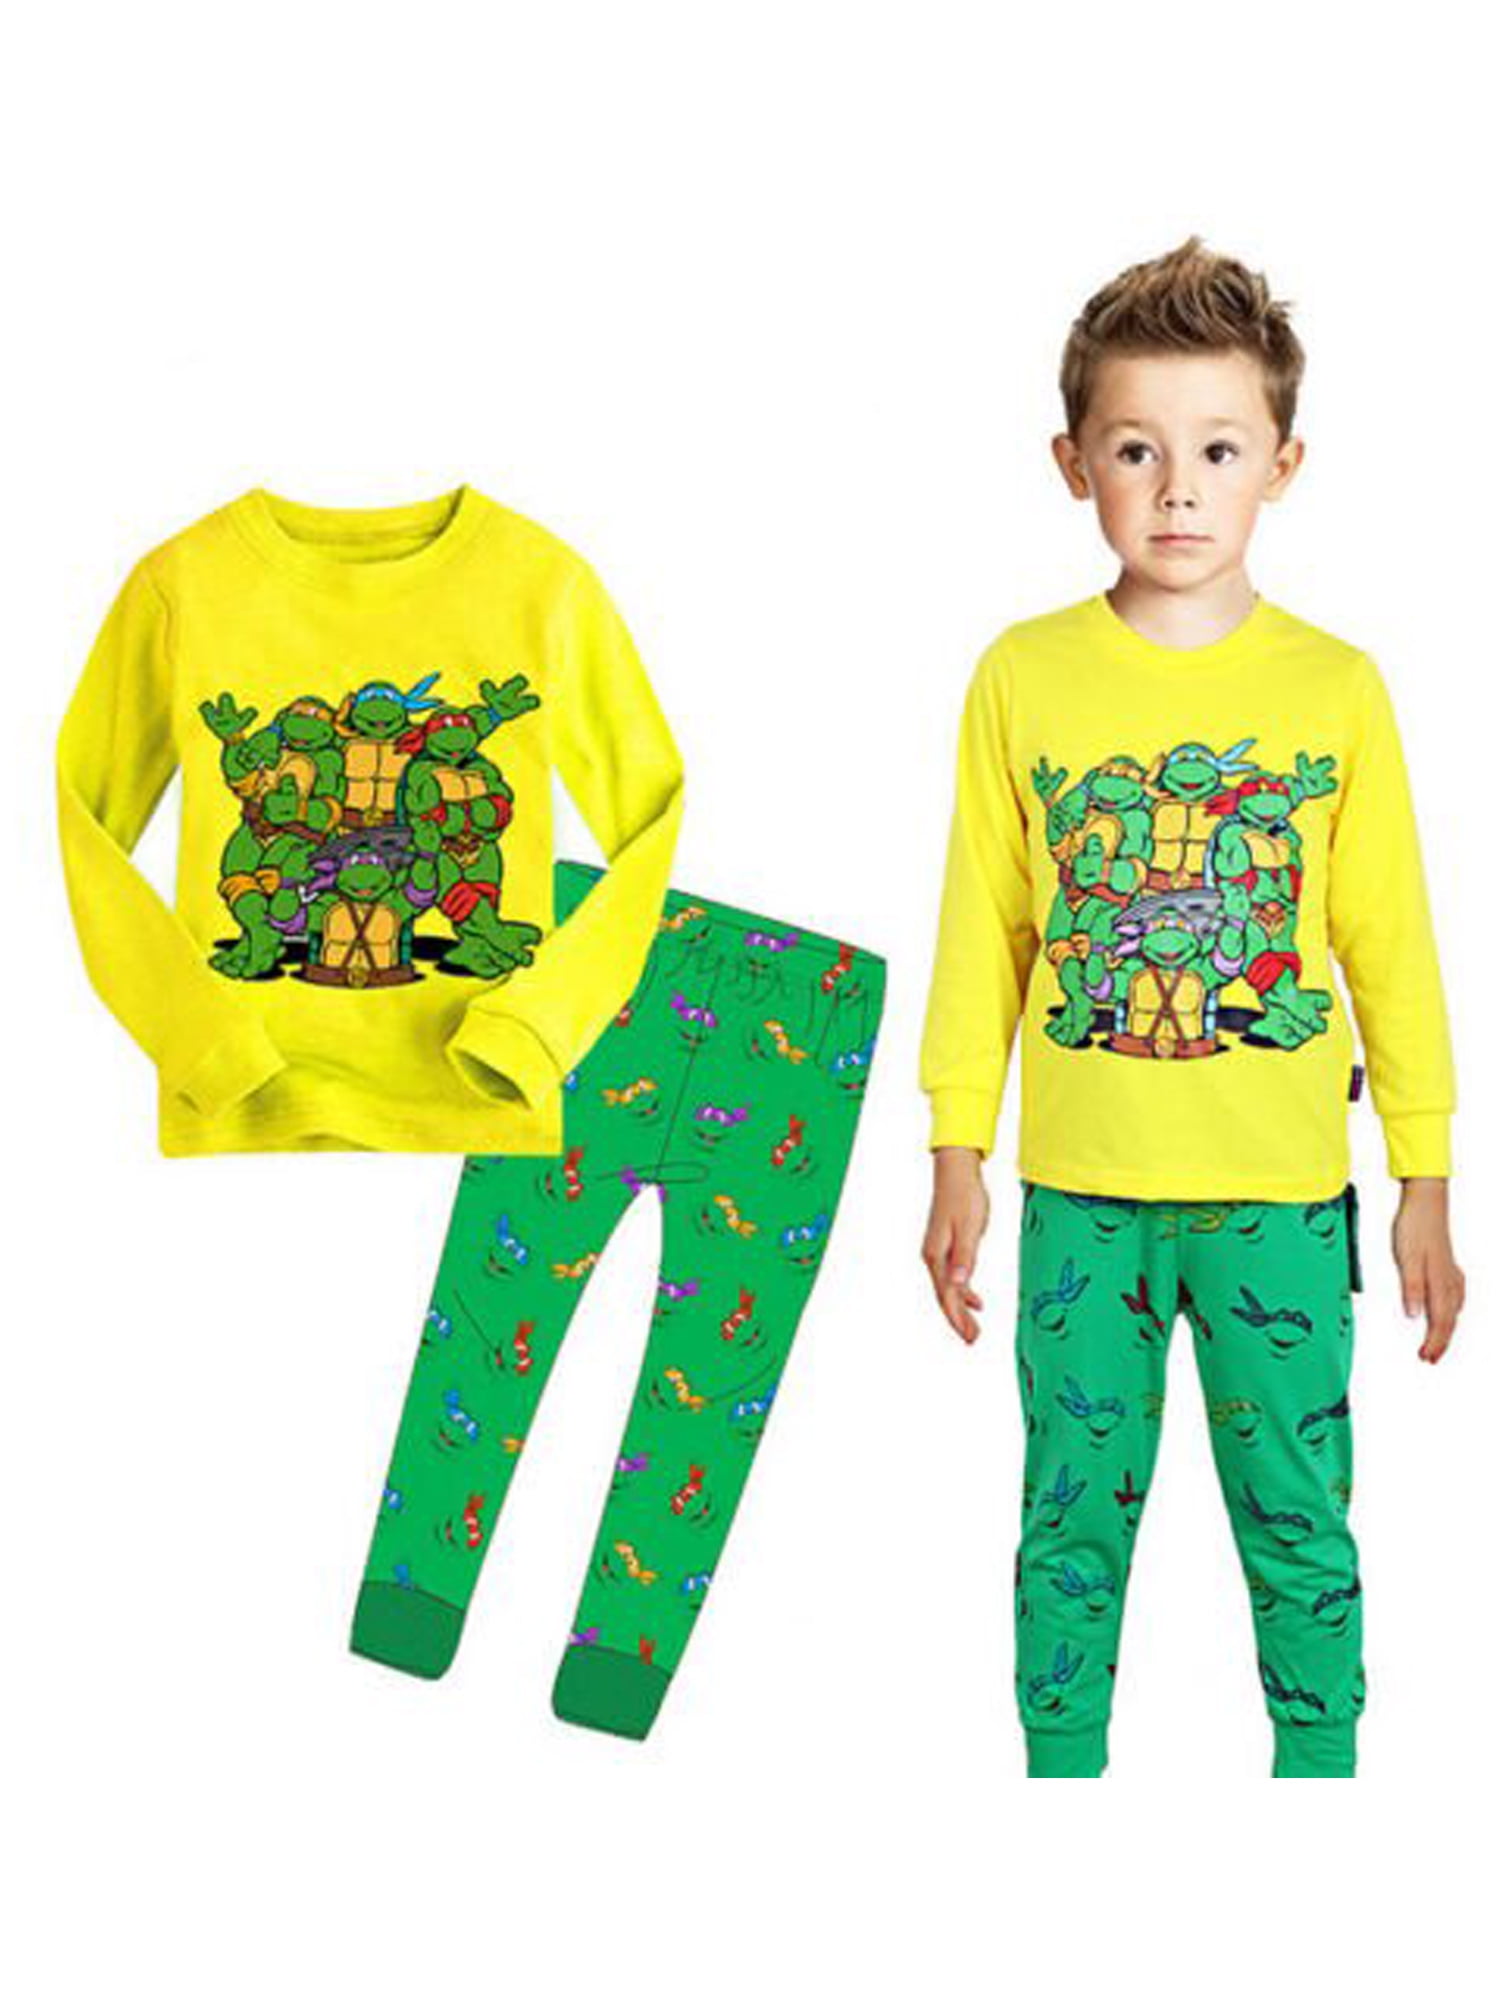 CM-Kid Boys Pyjamas Dinosaur Nightwear Cotton Toddler Clothes Kids Sleepwear Summer Short Sleeve Pjs Sets 2 Piece Outfit for Age 1-7 Years 